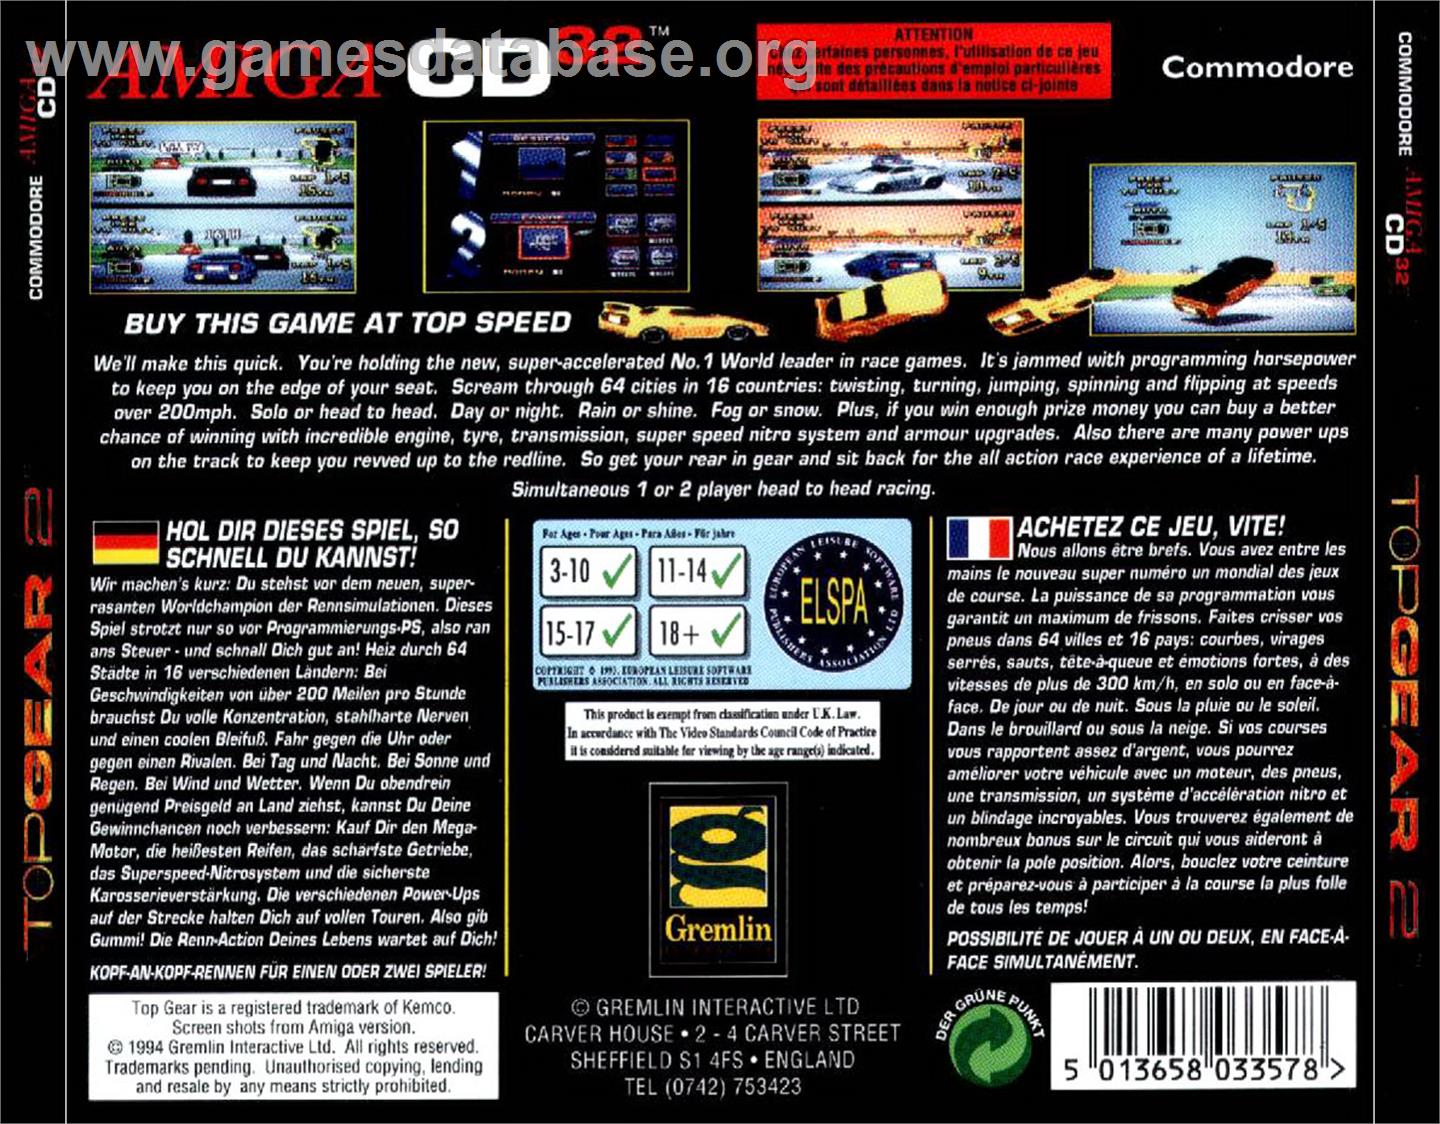 Top Gear 2 - Commodore Amiga CD32 - Artwork - Box Back